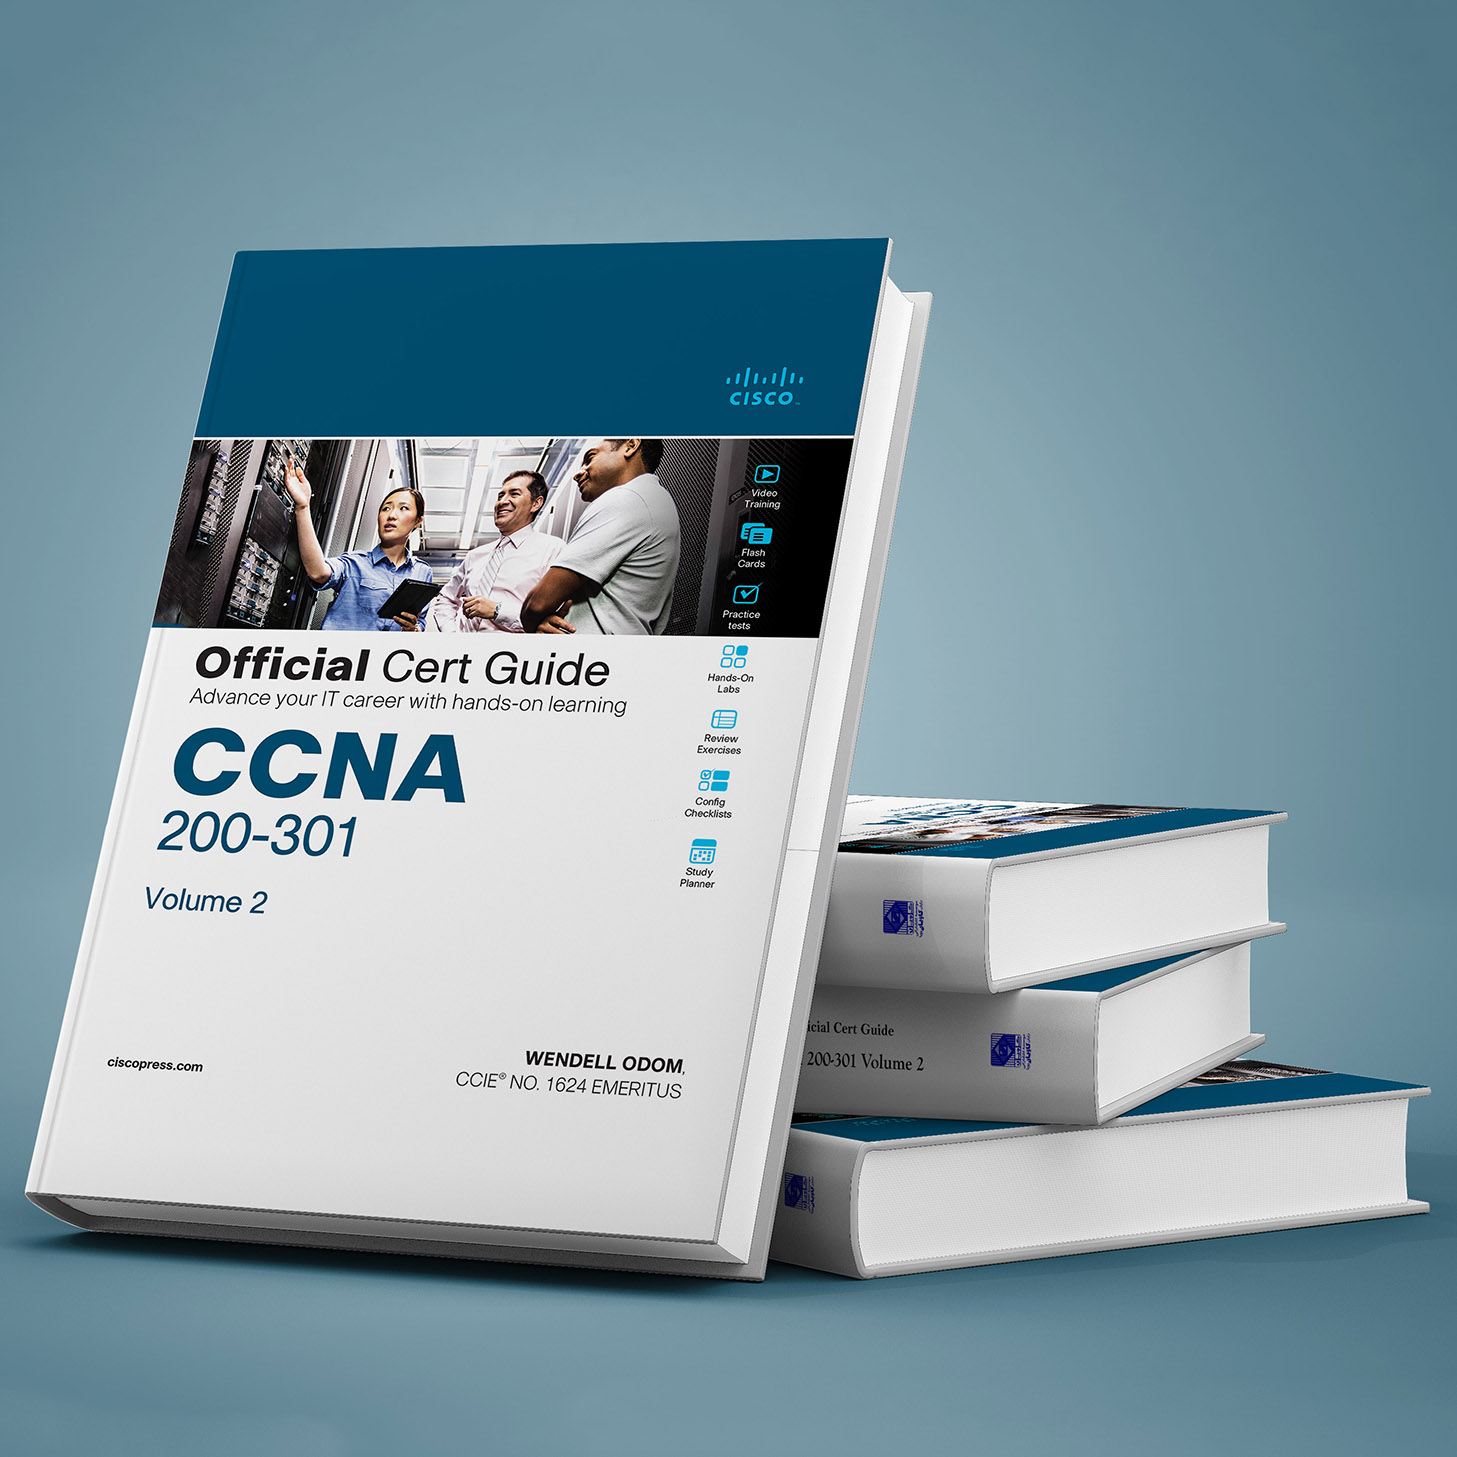 Official Cert Guide CCNA 200-301 Volume 2